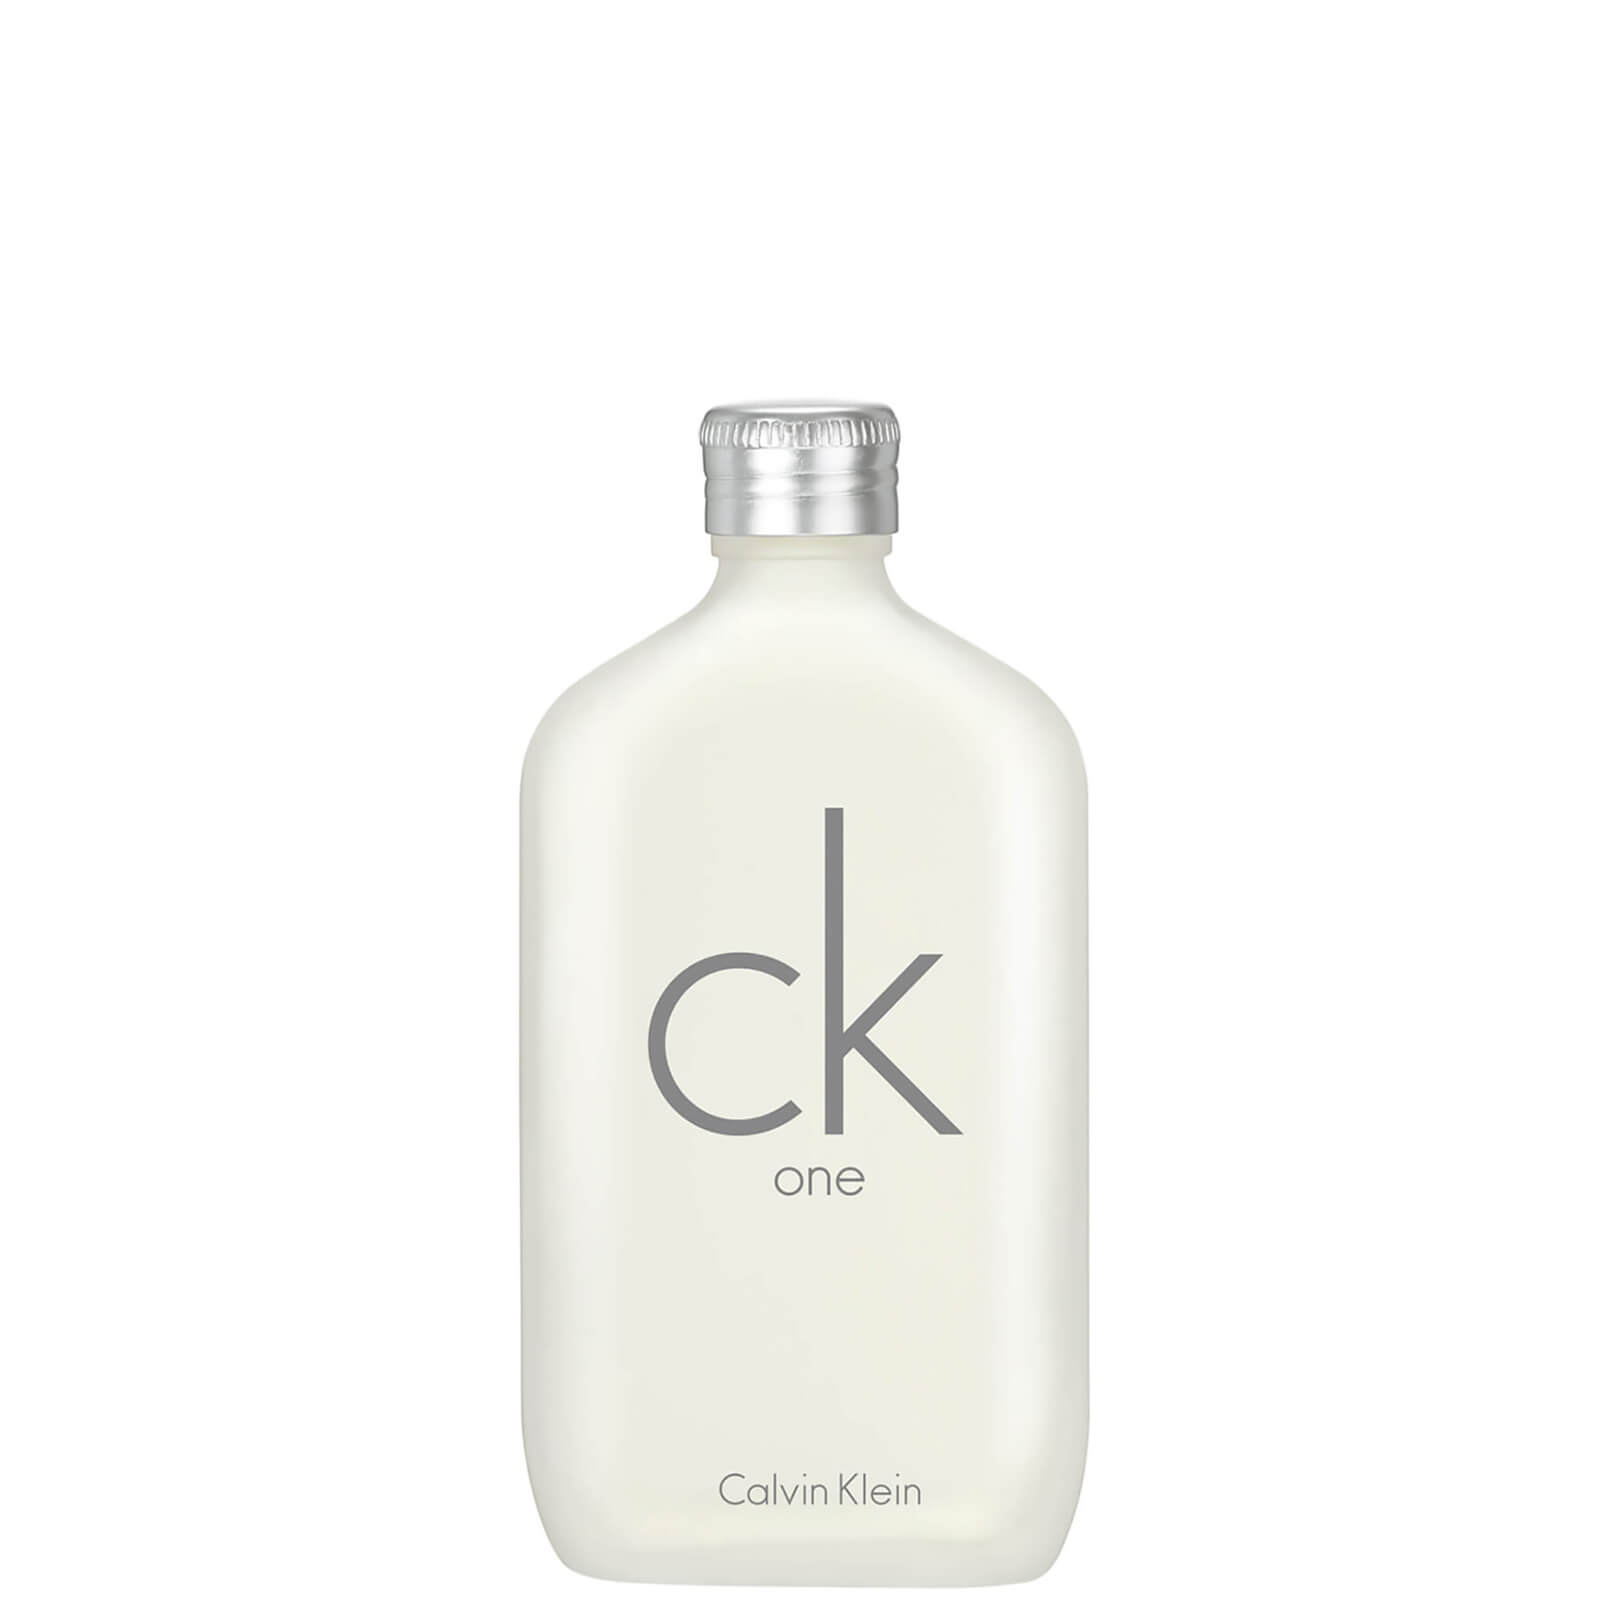 Photos - Women's Fragrance Calvin Klein CK One Eau de Toilette  65607680000 (50ml)